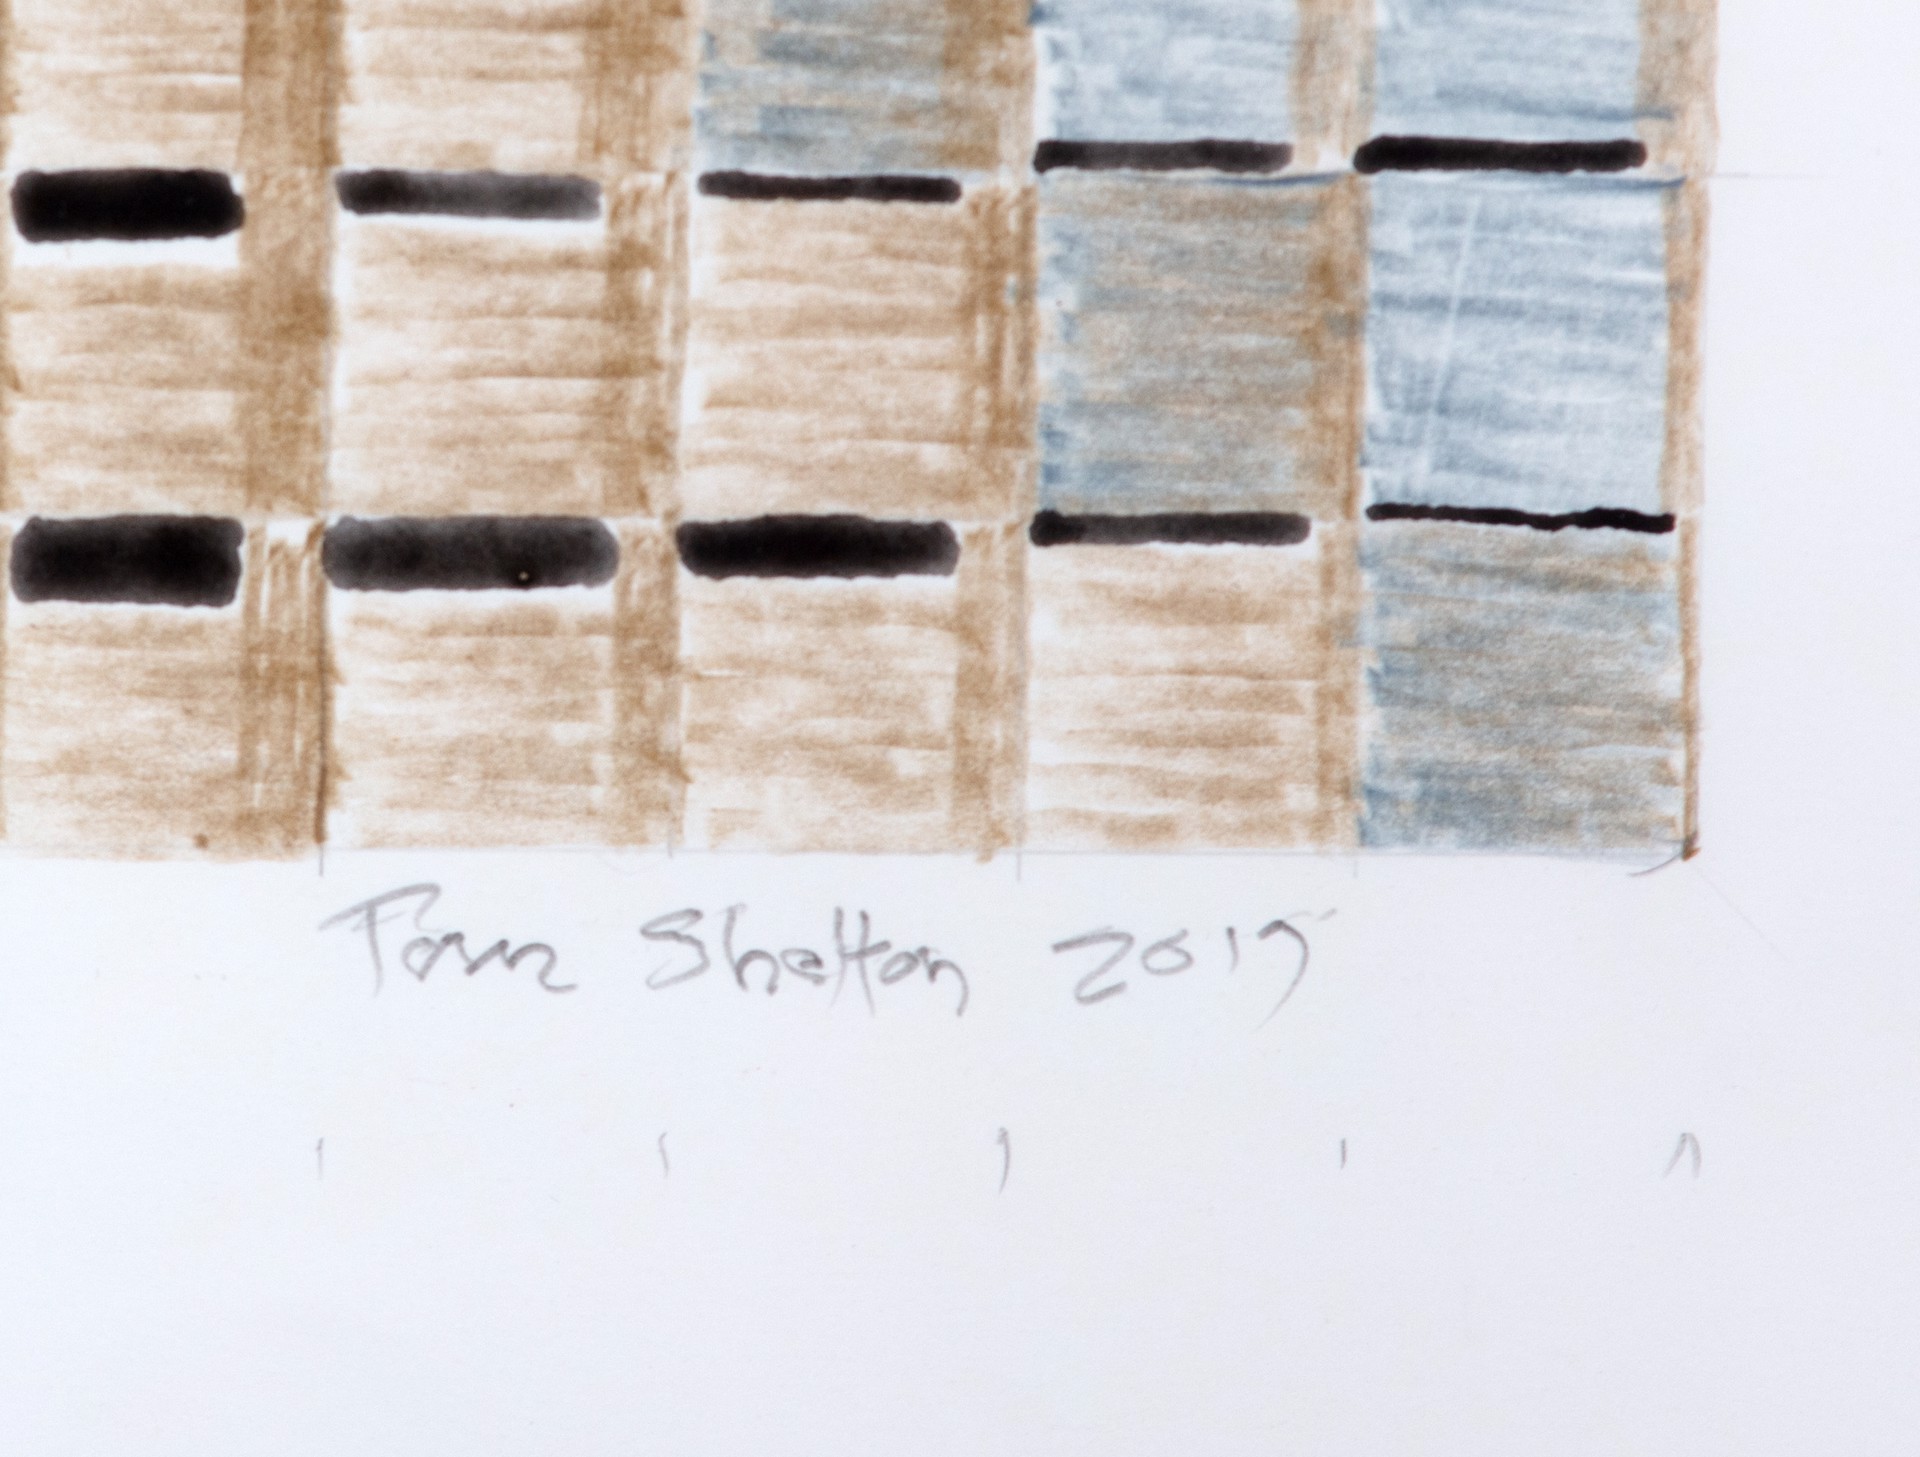 Blue & Brown Pattern by Tom Shelton